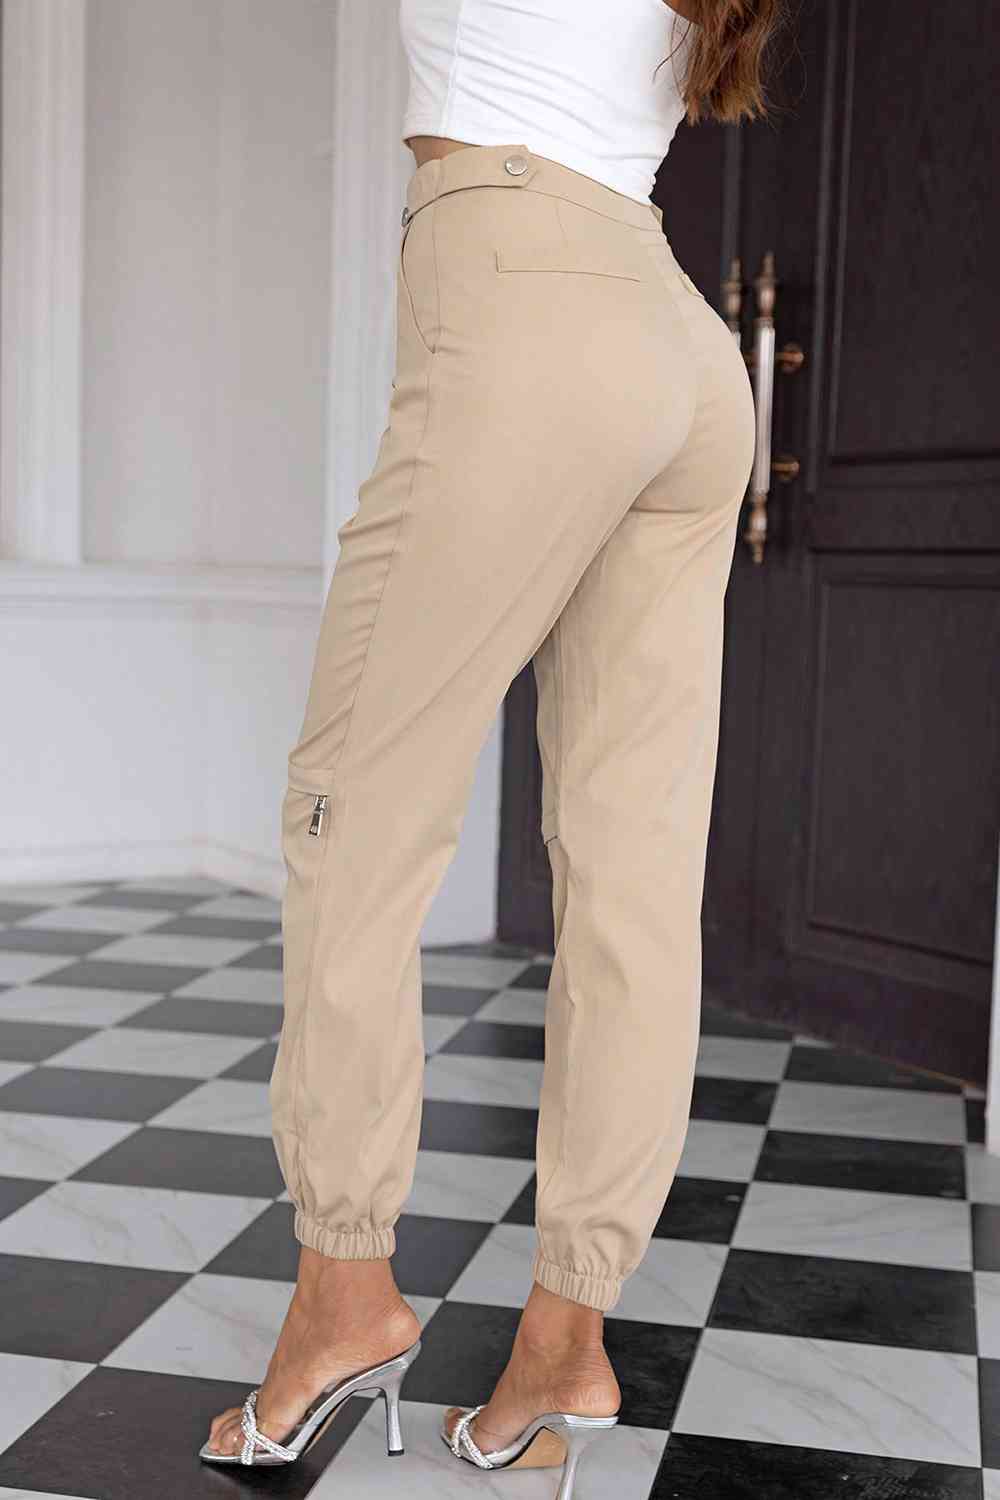 EnvyPantsWear Sand Brown High Waist Pants with Pockets